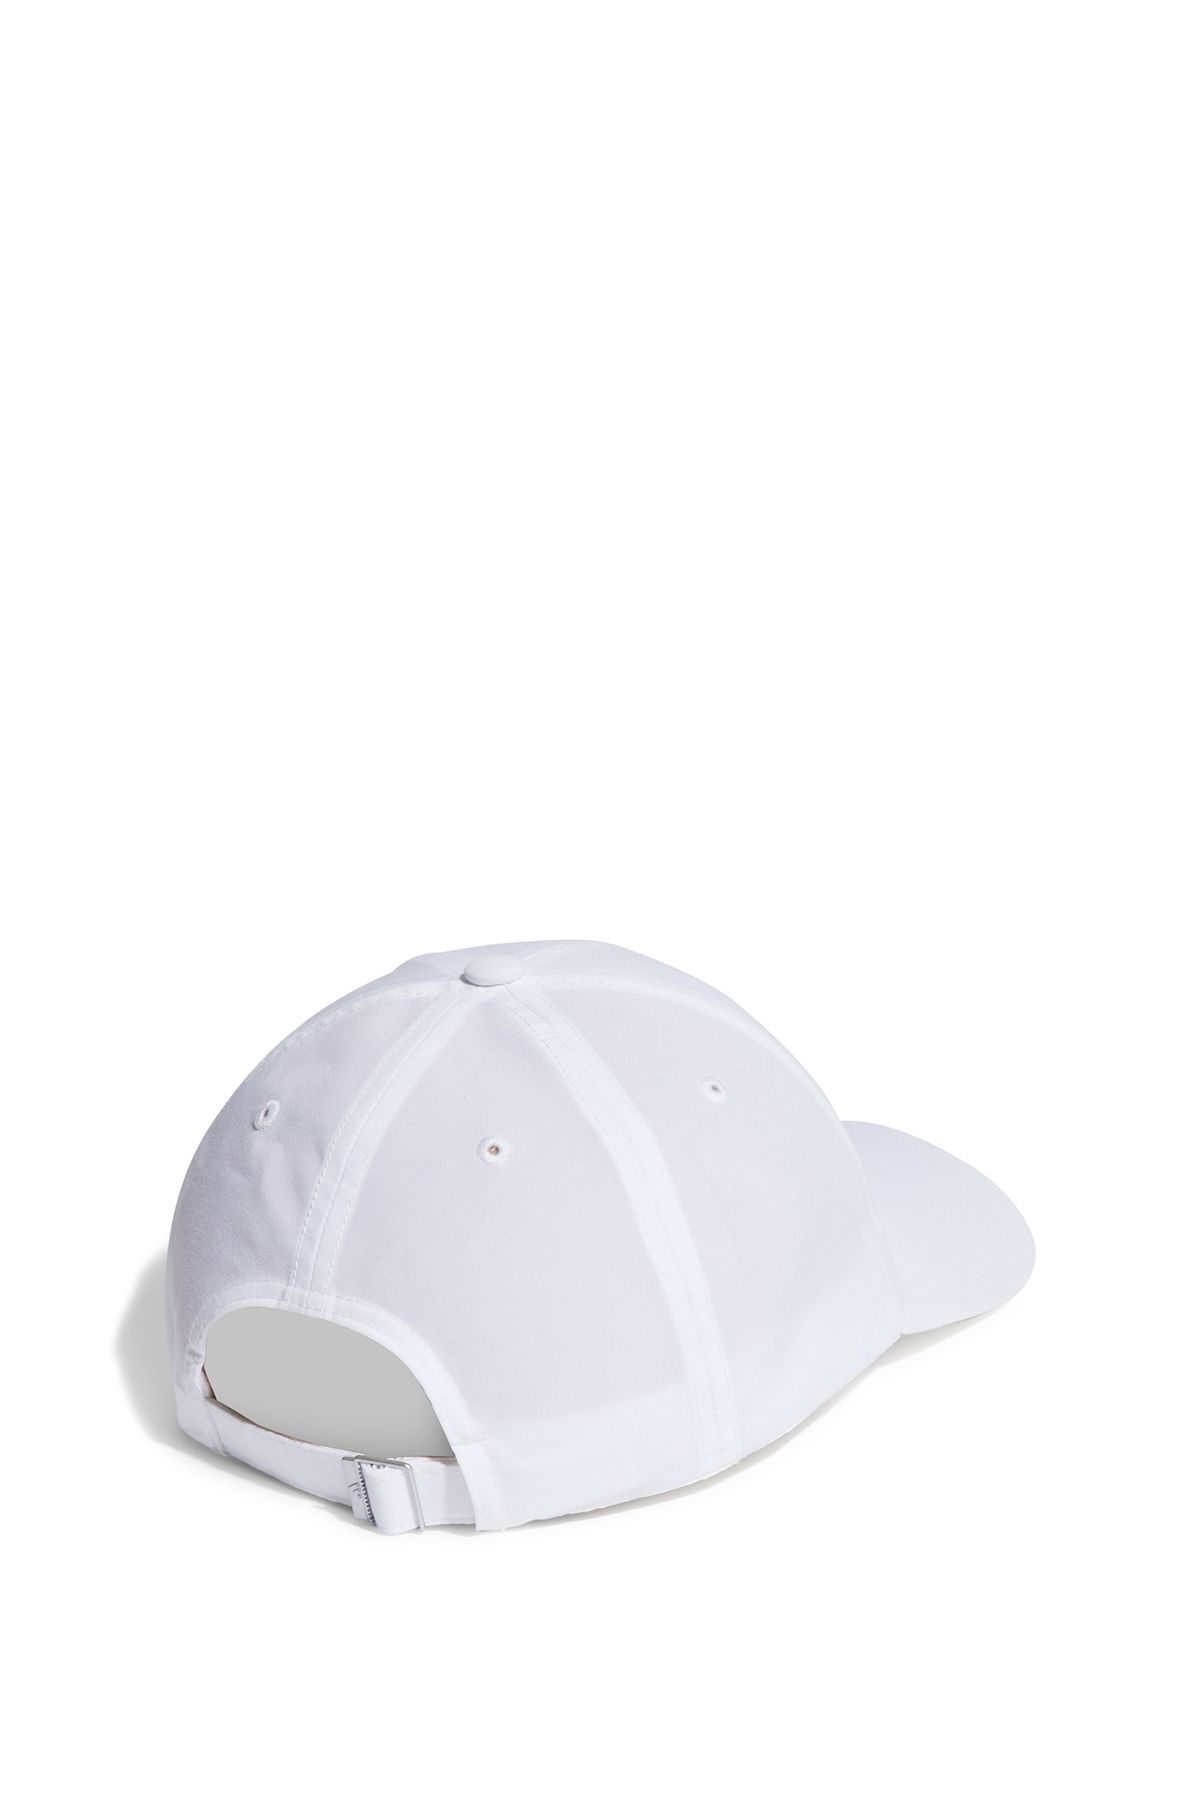 adidas White Unisex Hat IC2069 اجرا می شود